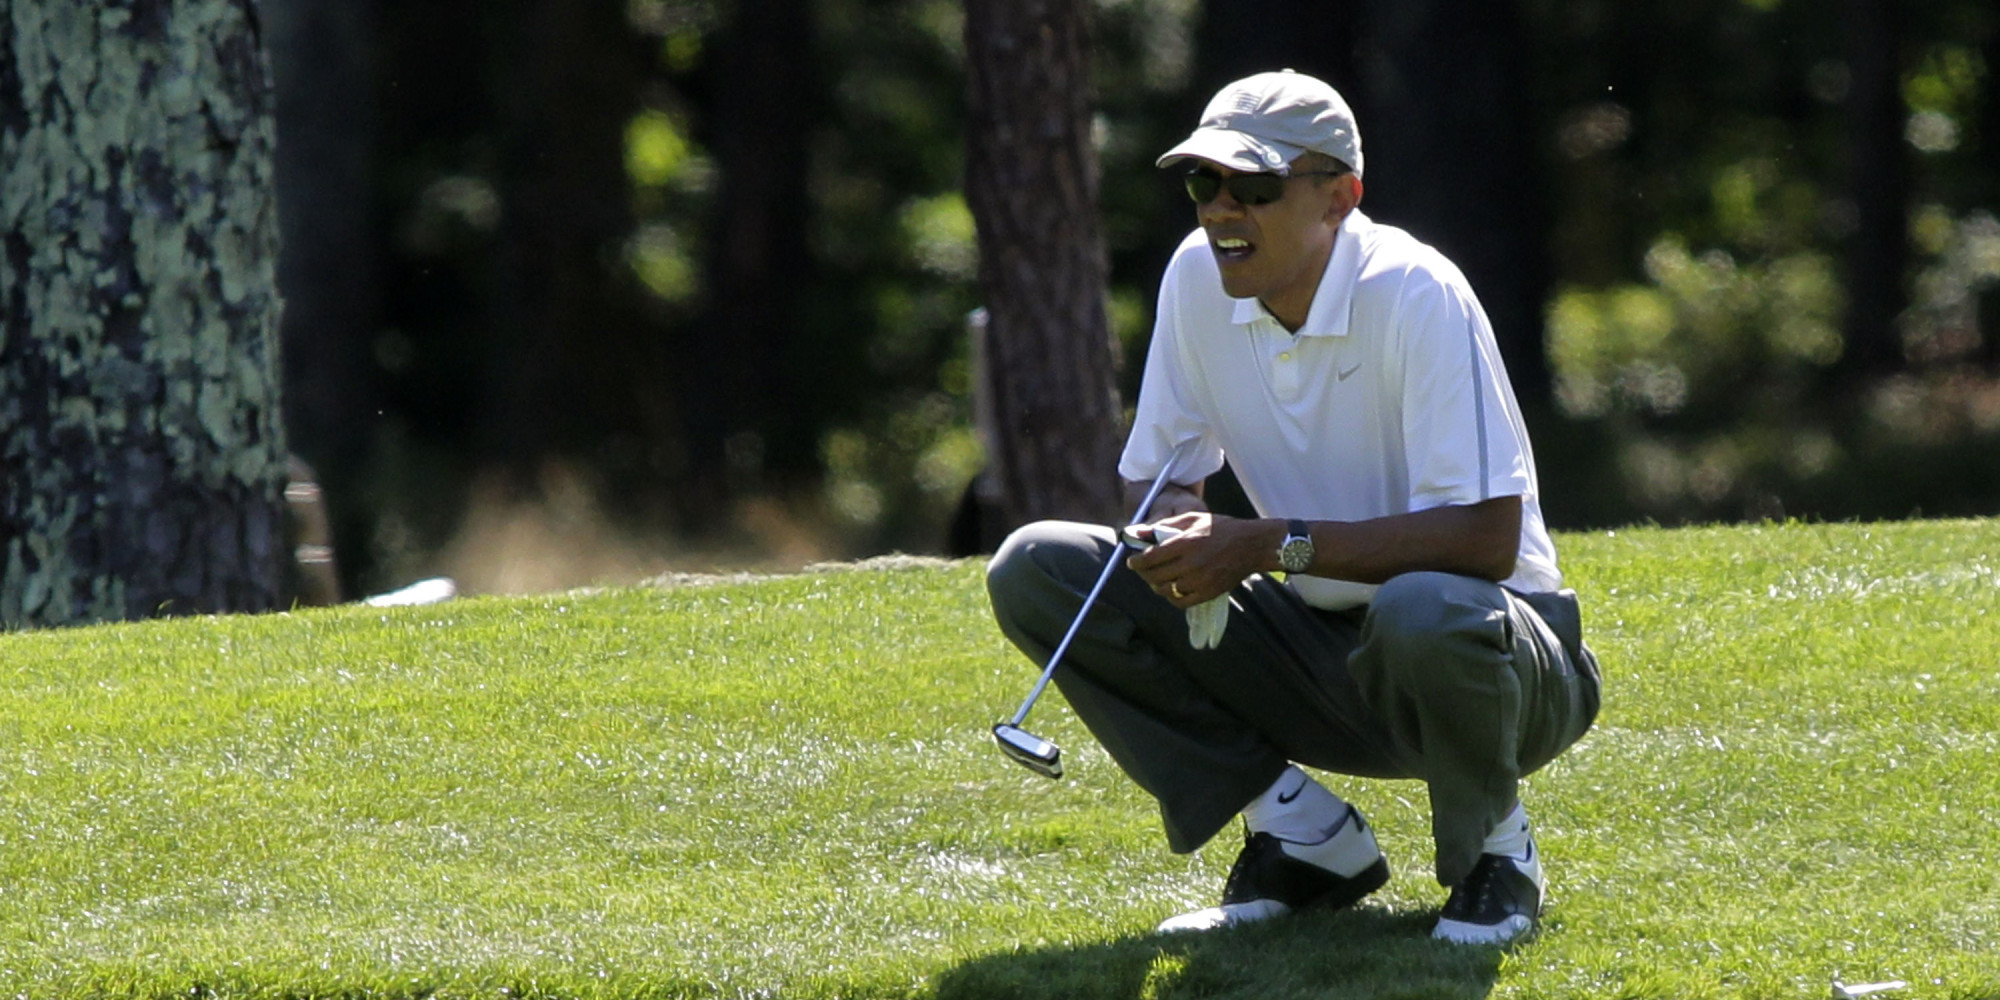 Obama I Should Have Anticipated The Optics Of Golfing After James